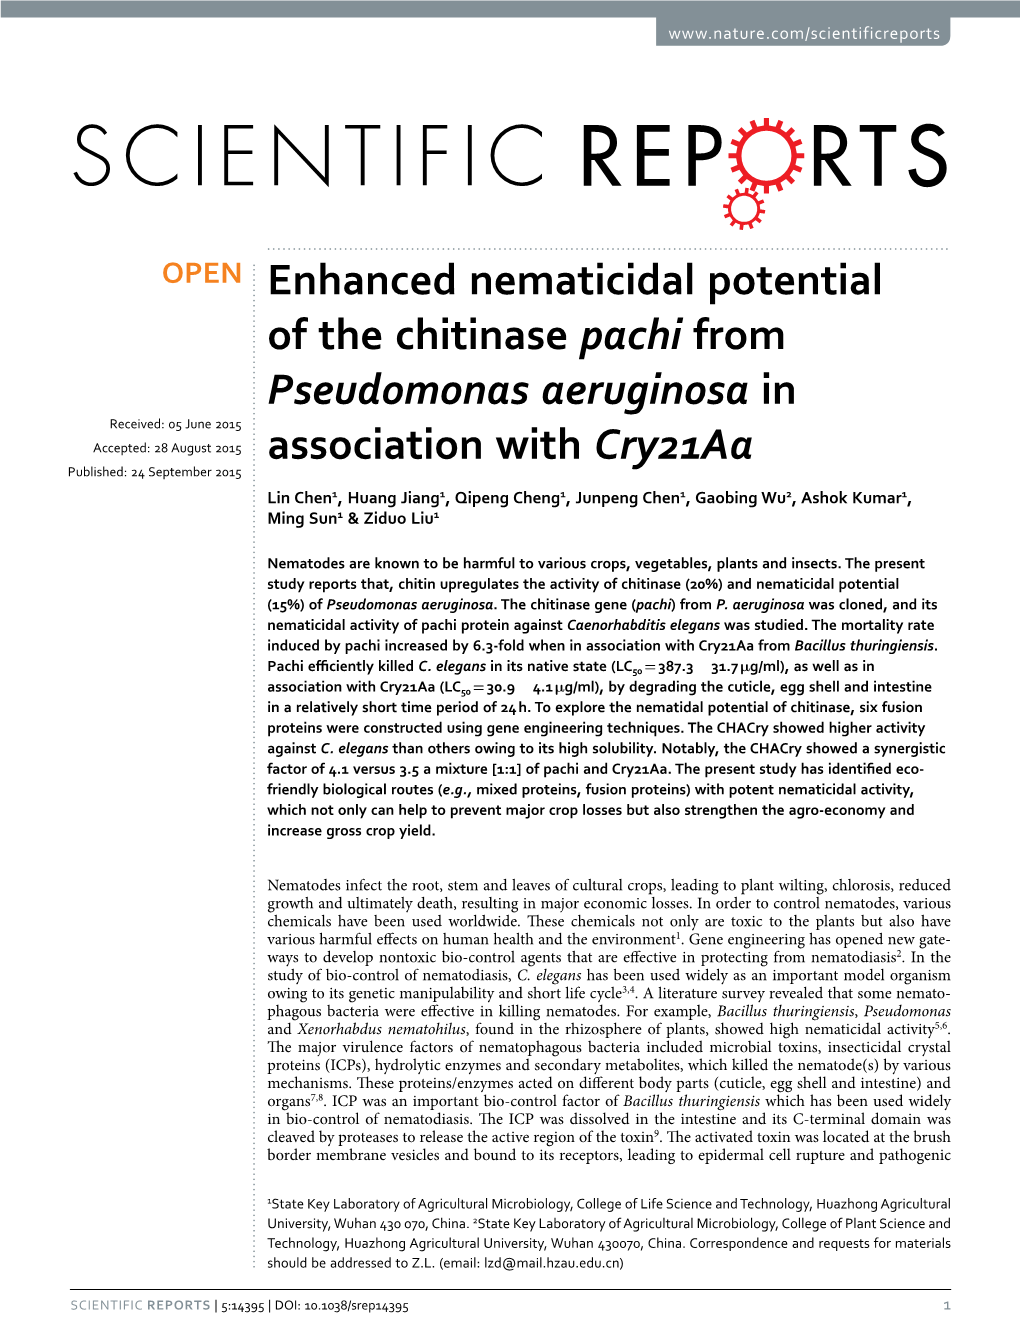 Enhanced Nematicidal Potential of the Chitinase Pachi from Pseudomonas